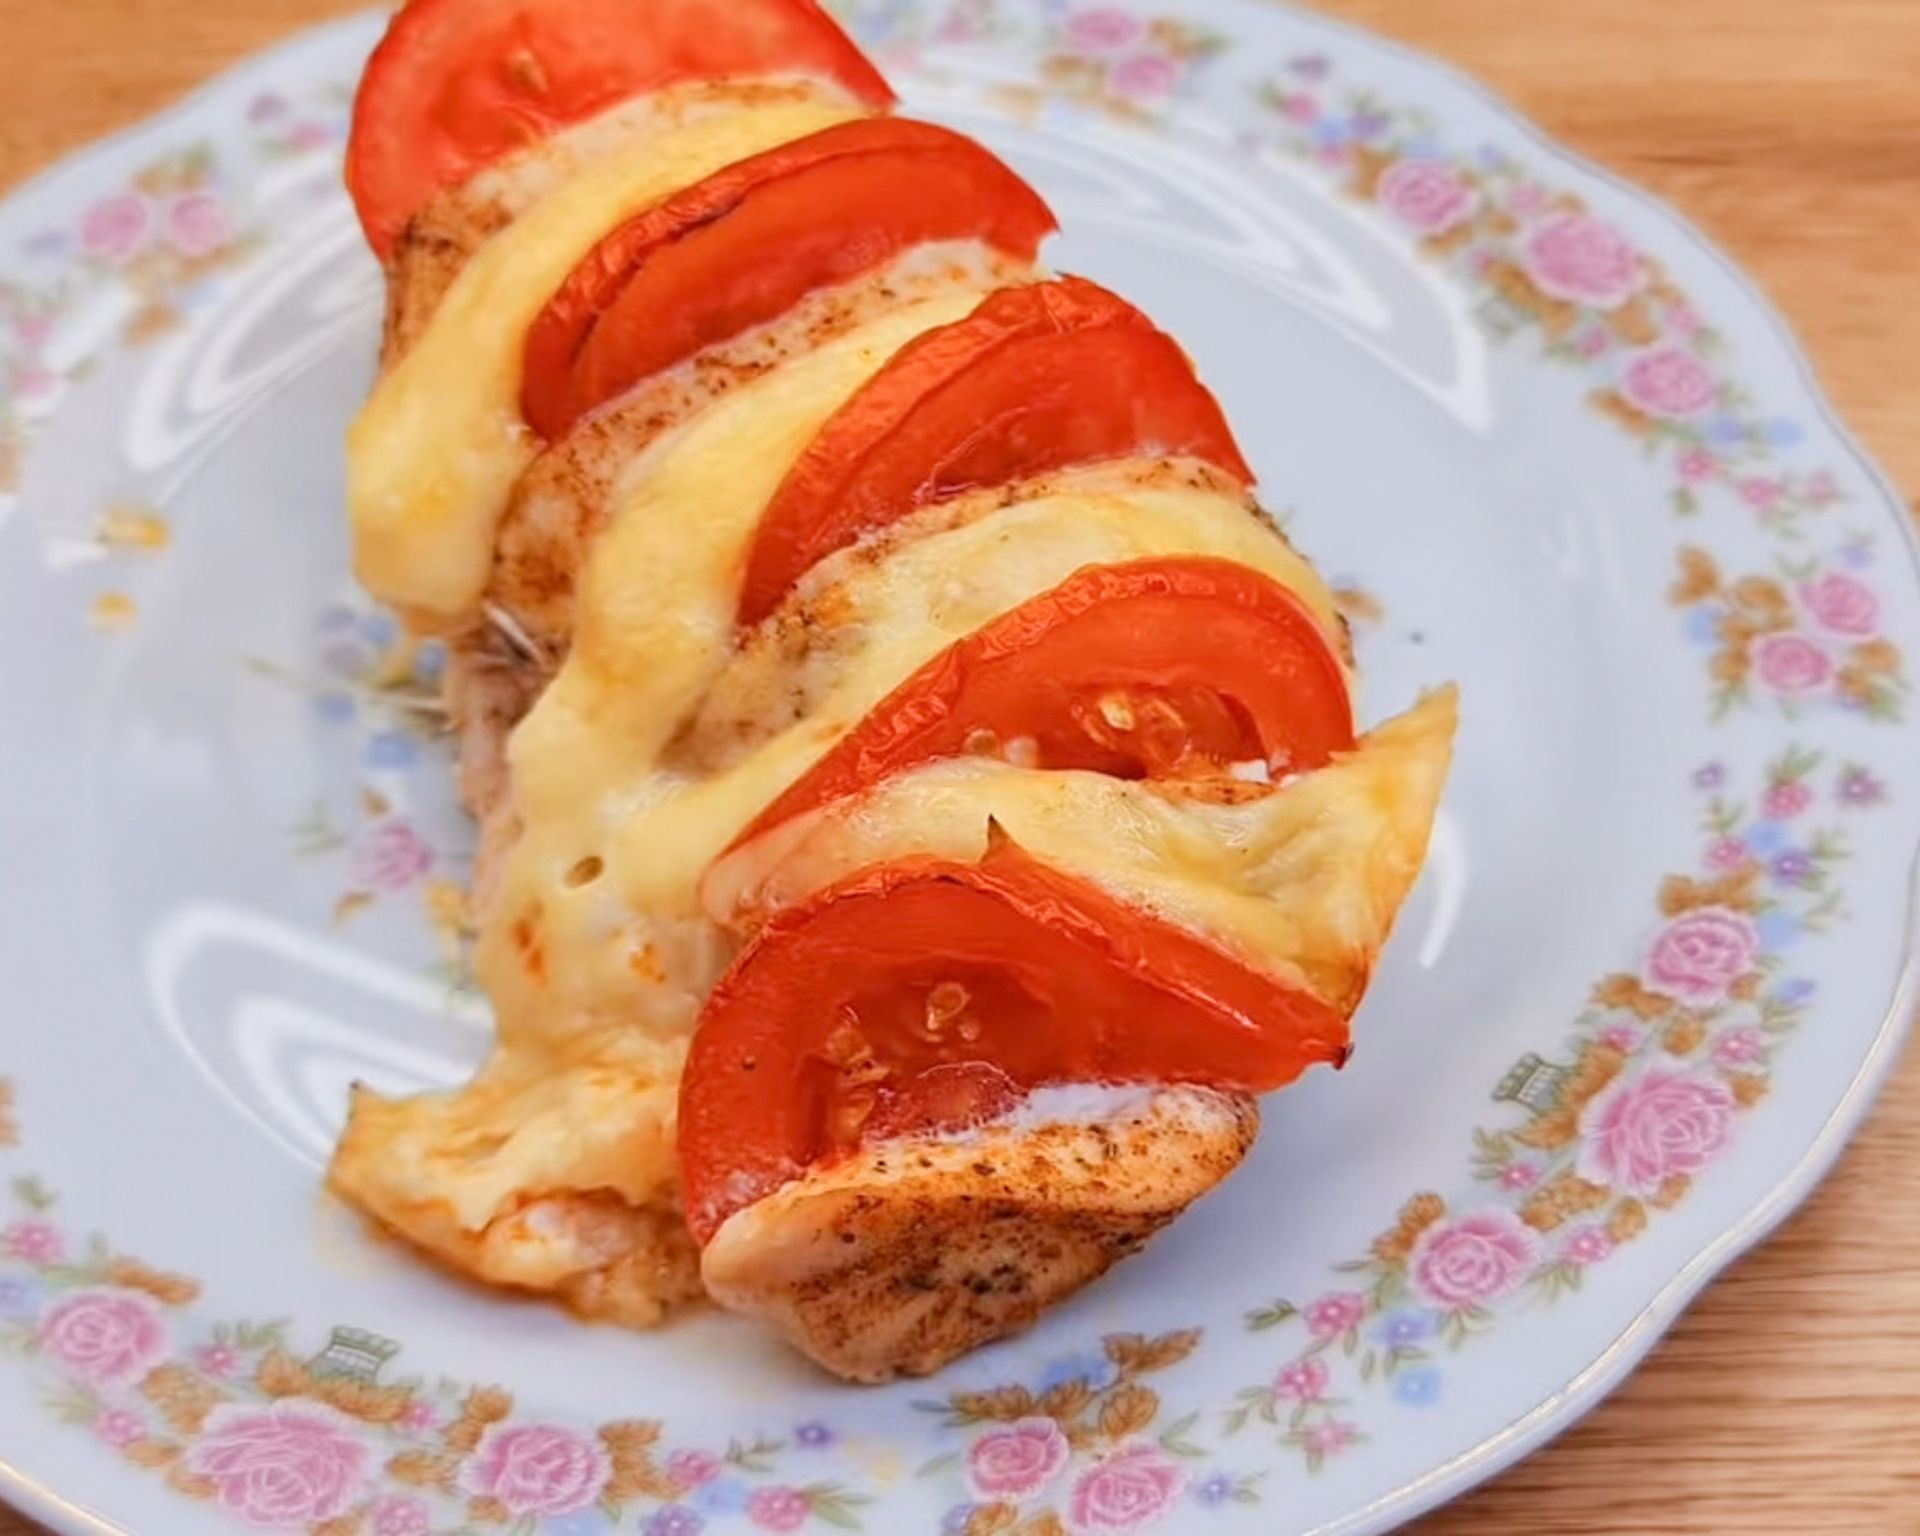 Kuracie mäsko s paradajkami a tvrdý syr na kvietkovanom tanieri